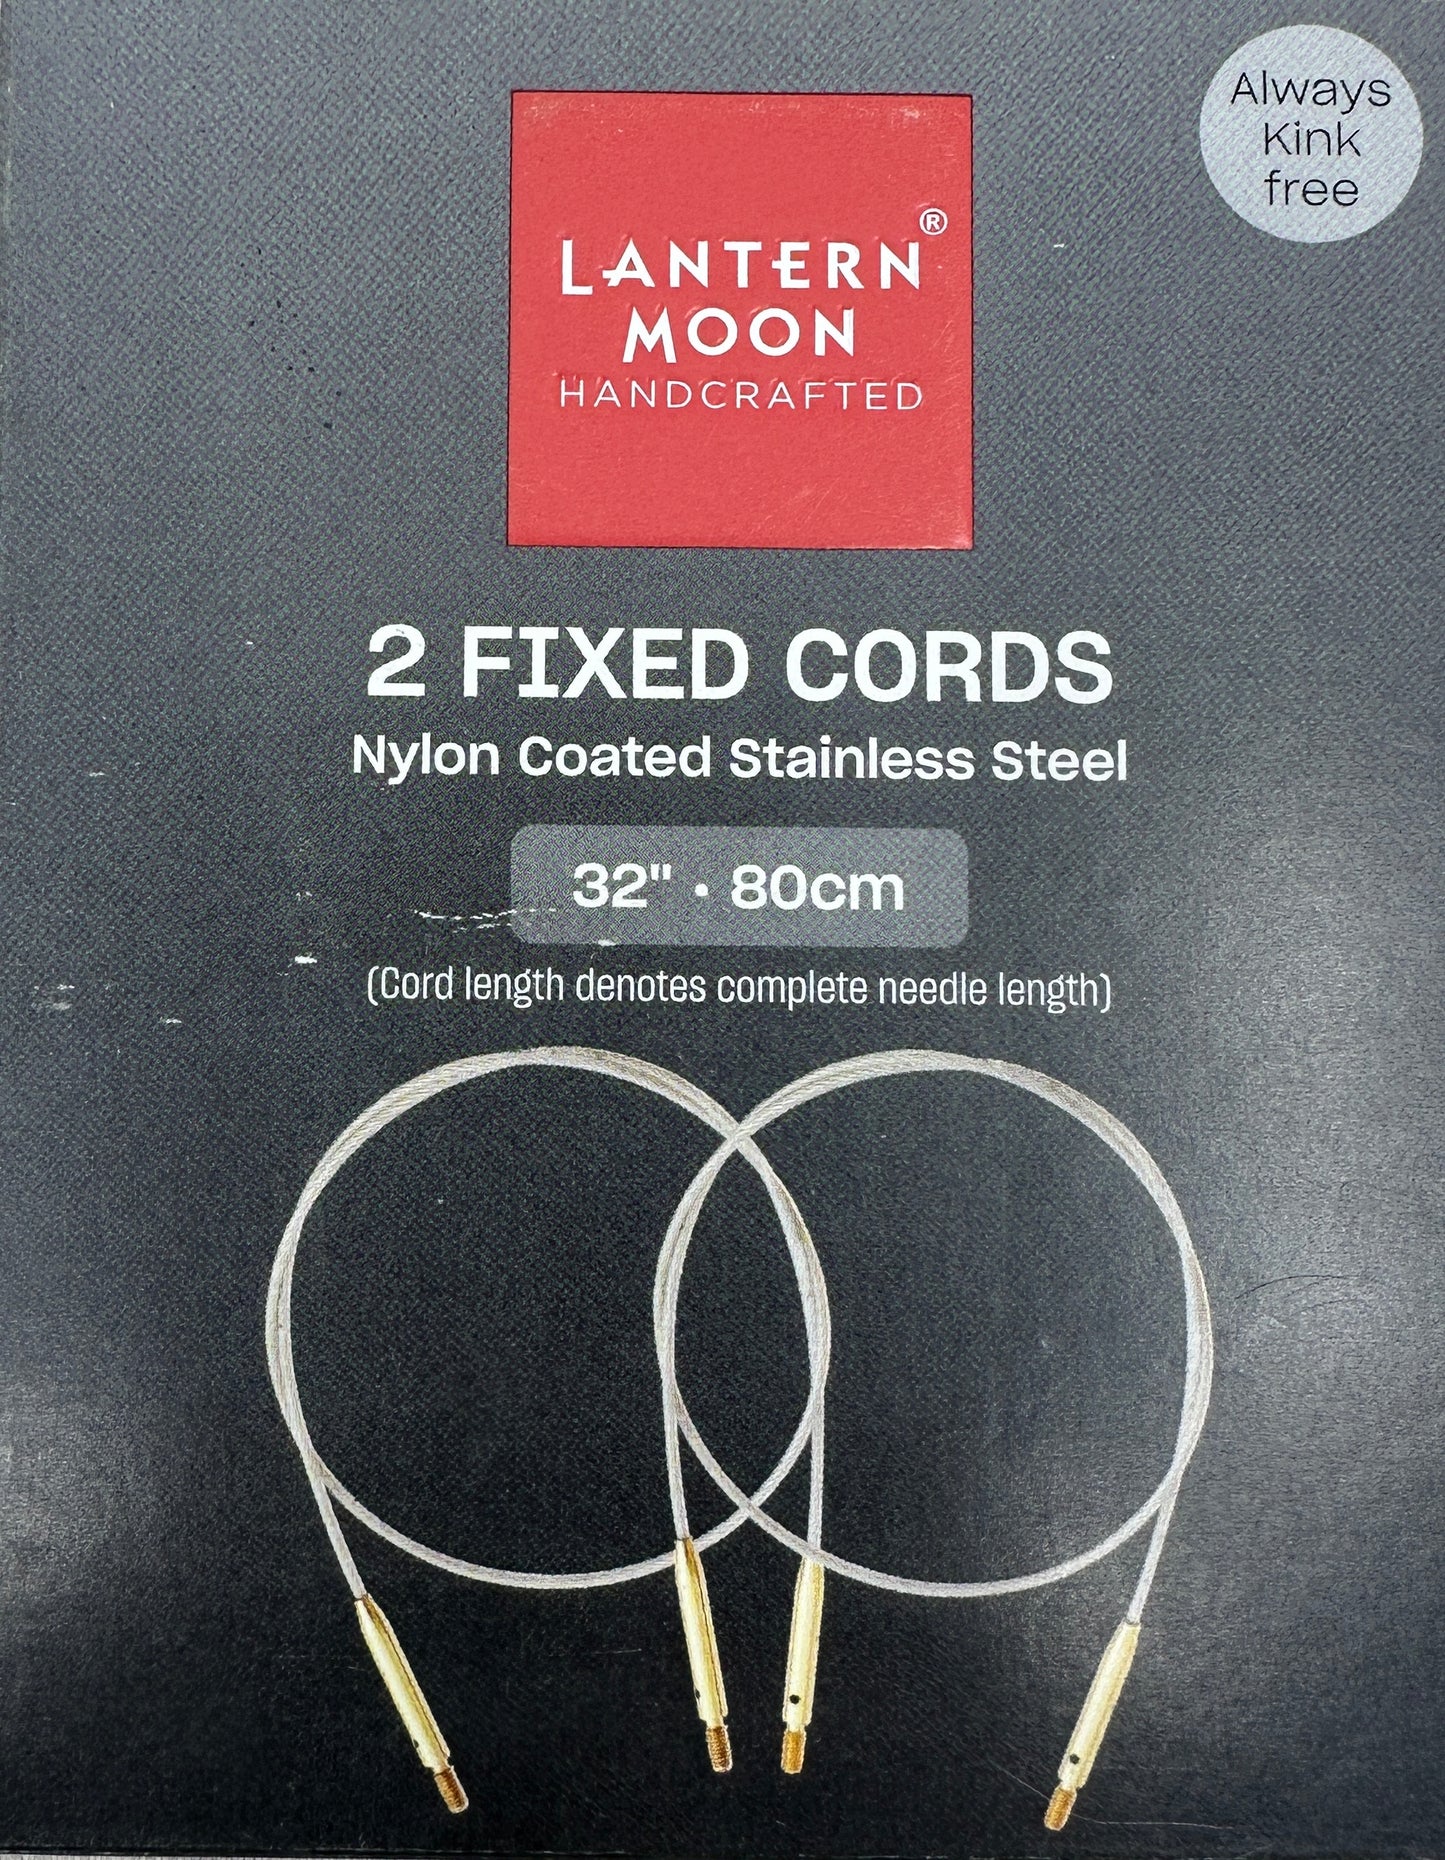 Lantern Moon - Fixed Circular Cords